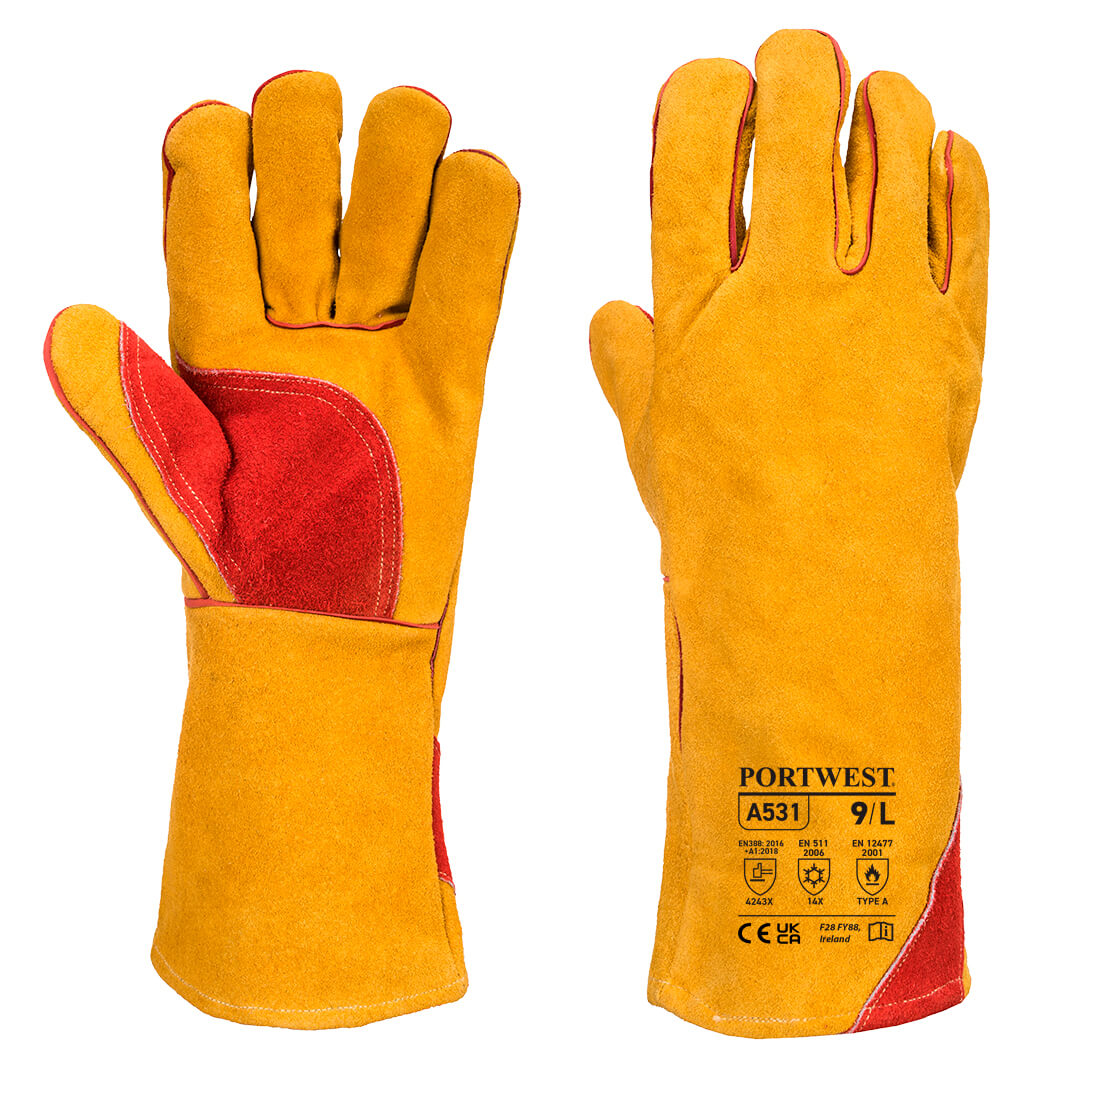 Portwest A531 Reinforced Winter Welding Gauntlet Gloves Size 10